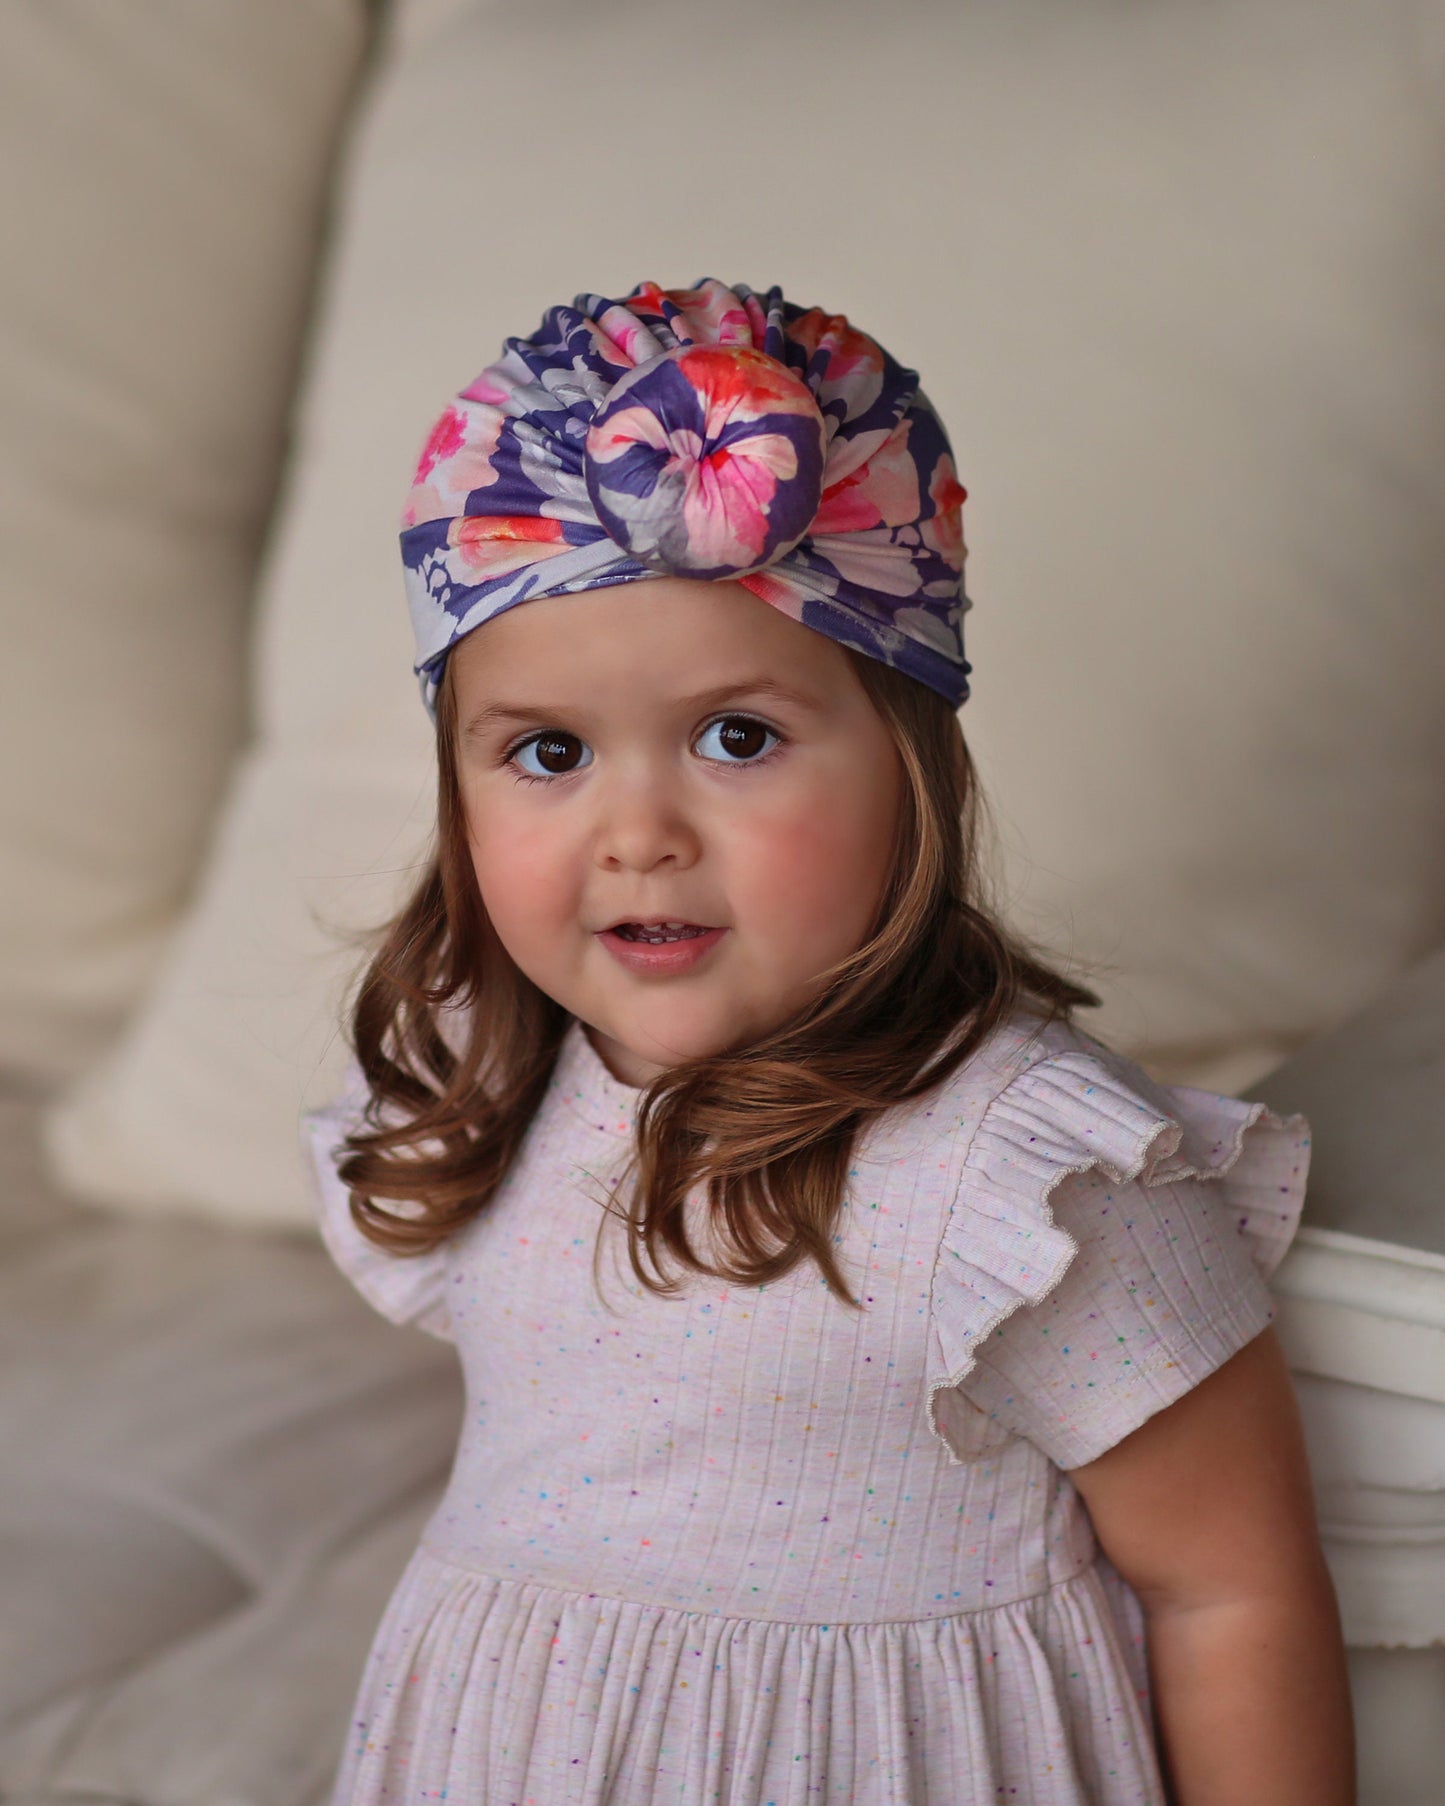 Gray and Pink Roses Turban - Baby Turban - Toddler Turban - Floral Turban - Baby knot turban - Baby Head Wrap - Knot Turban